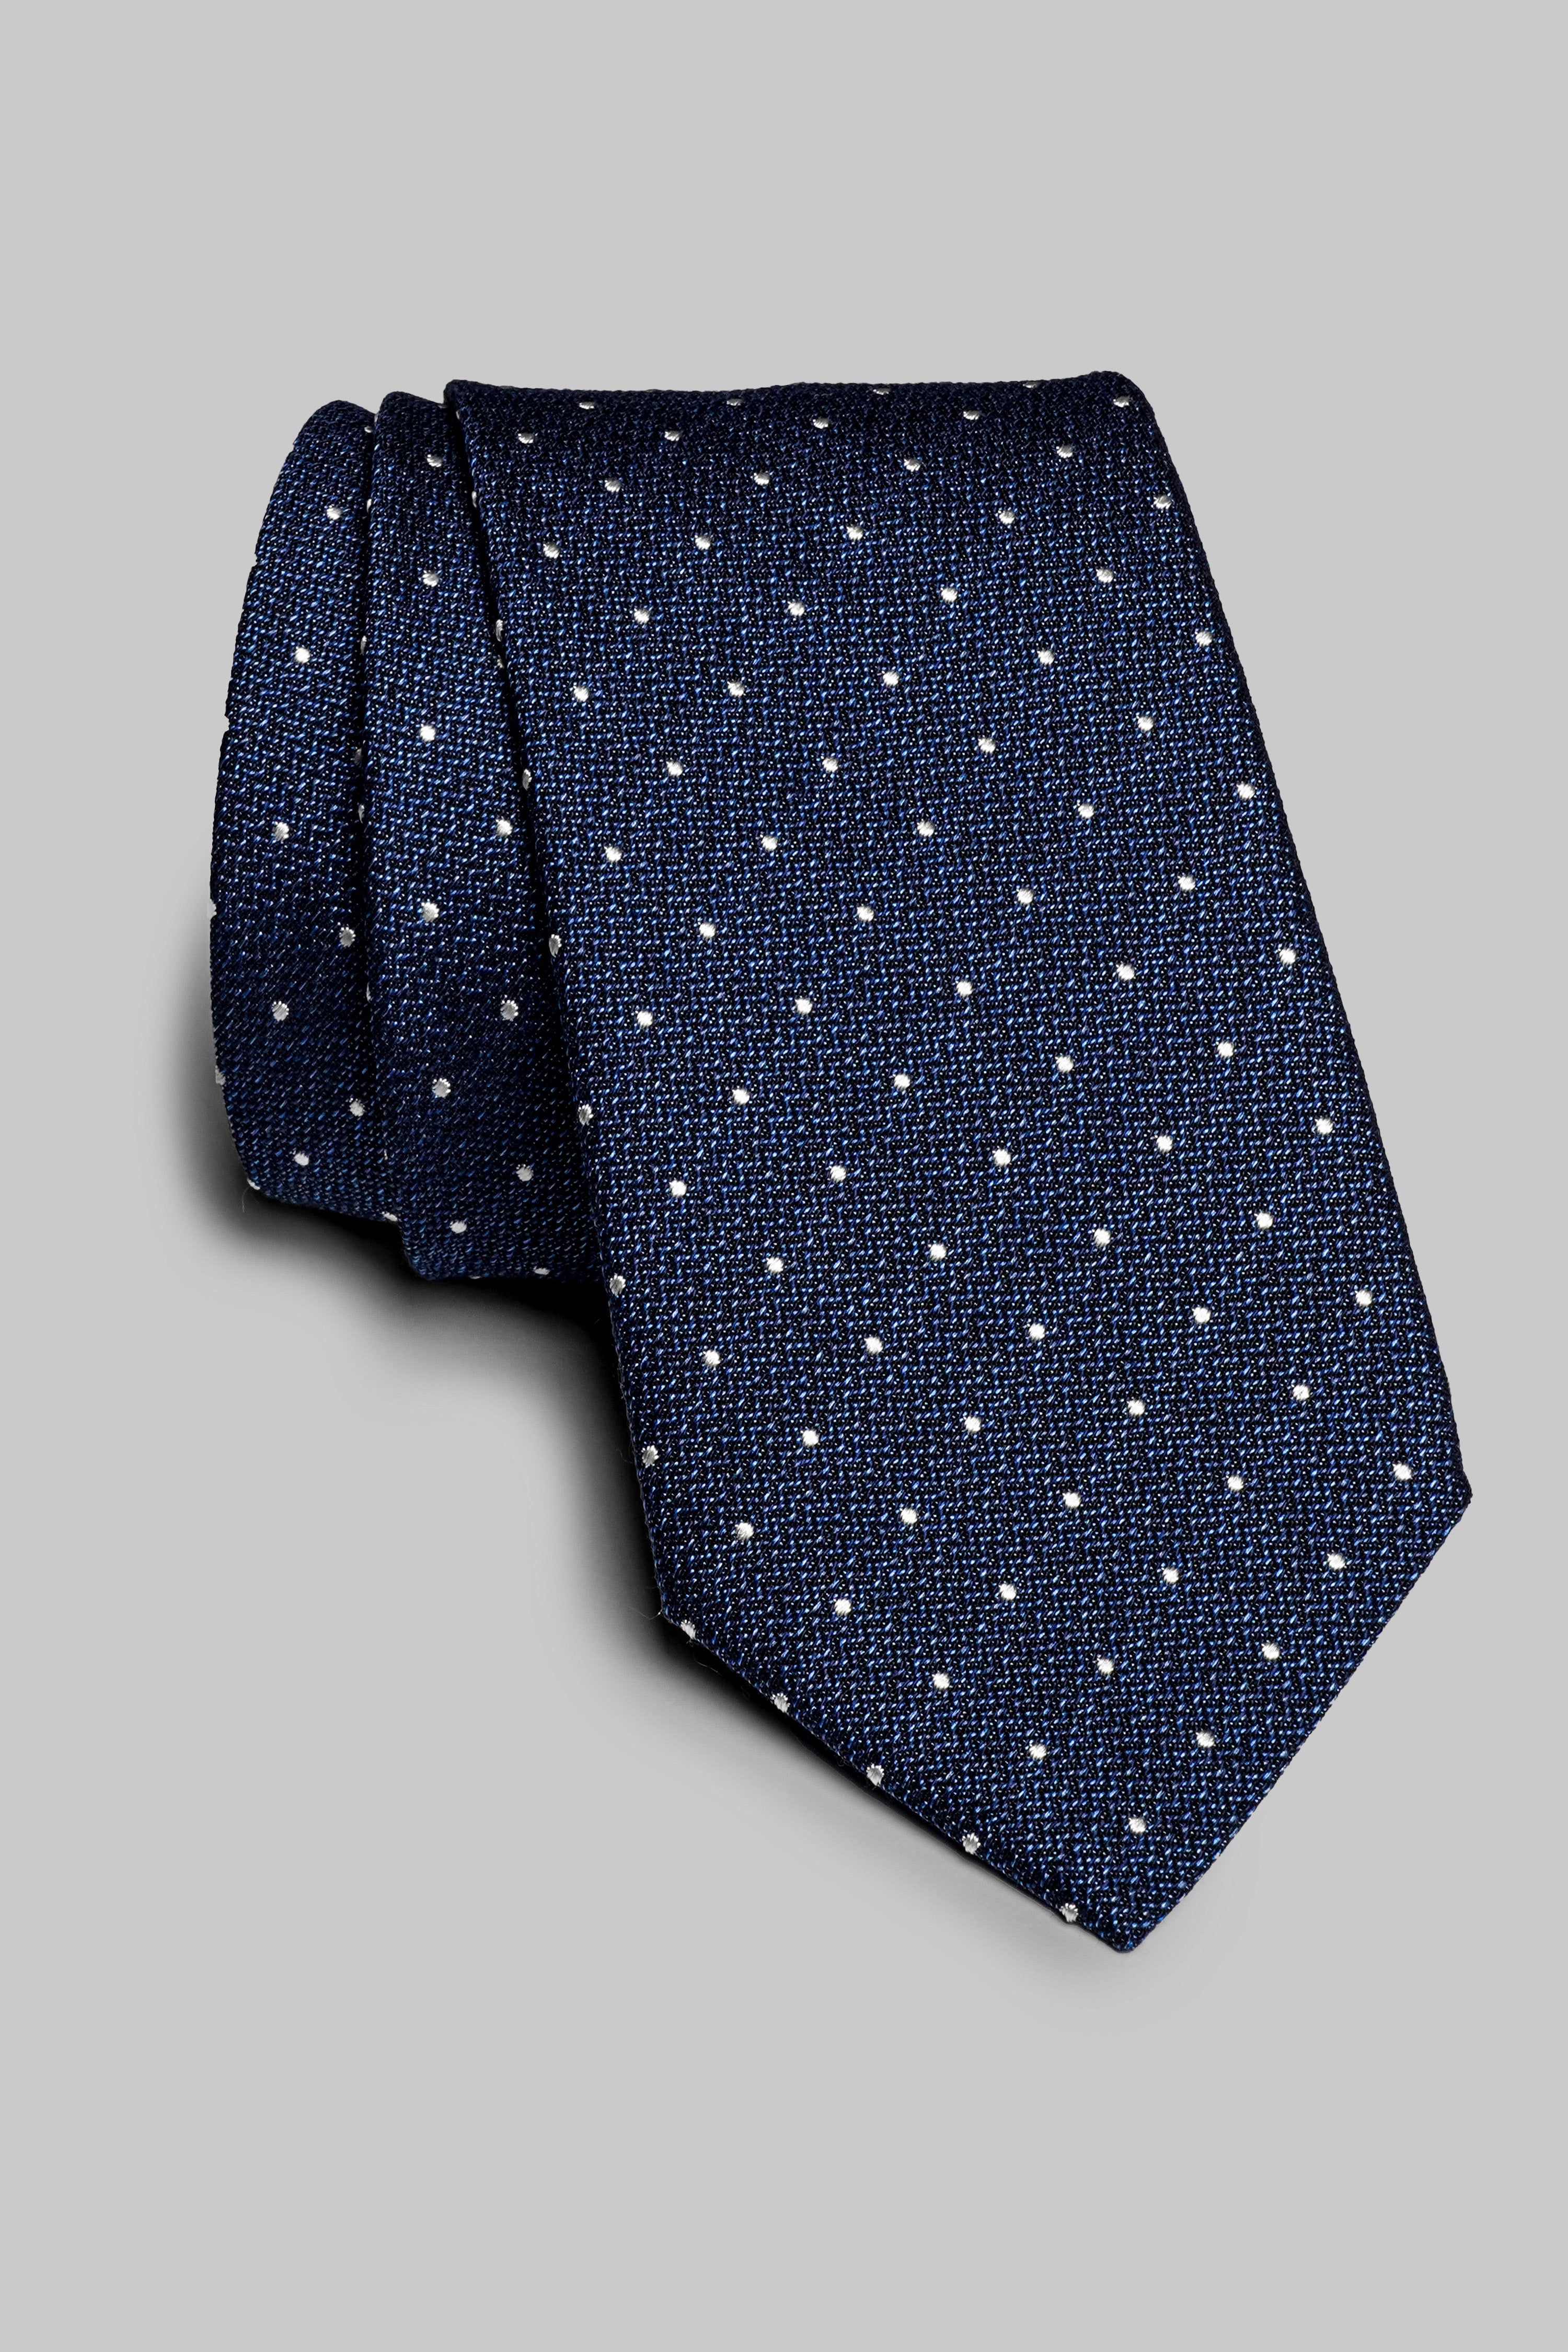 Vue alternative Pindot cravate tissée en bleu palais